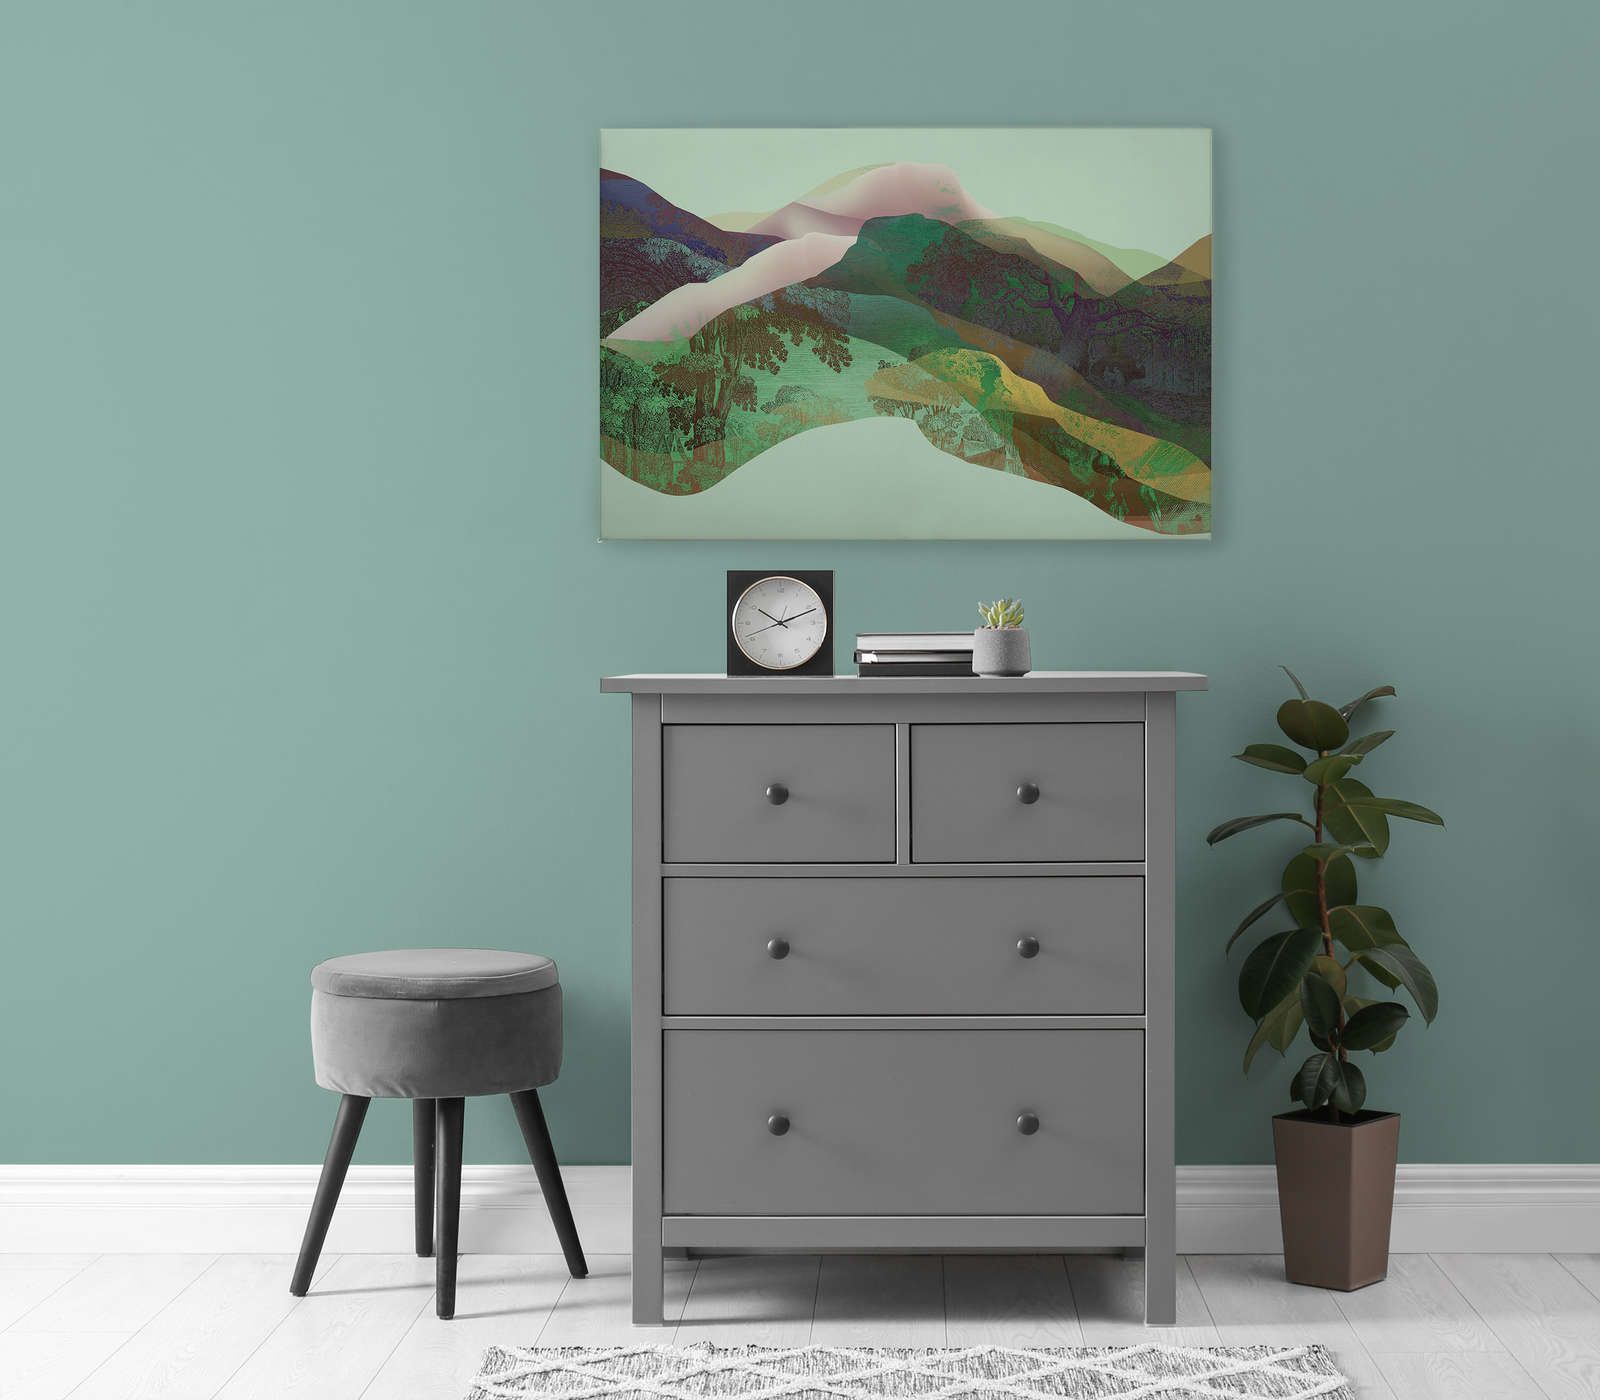             Magic Mountain 3 - Canvas schilderij groene bergen modern design - 0,90 m x 0,60 m
        